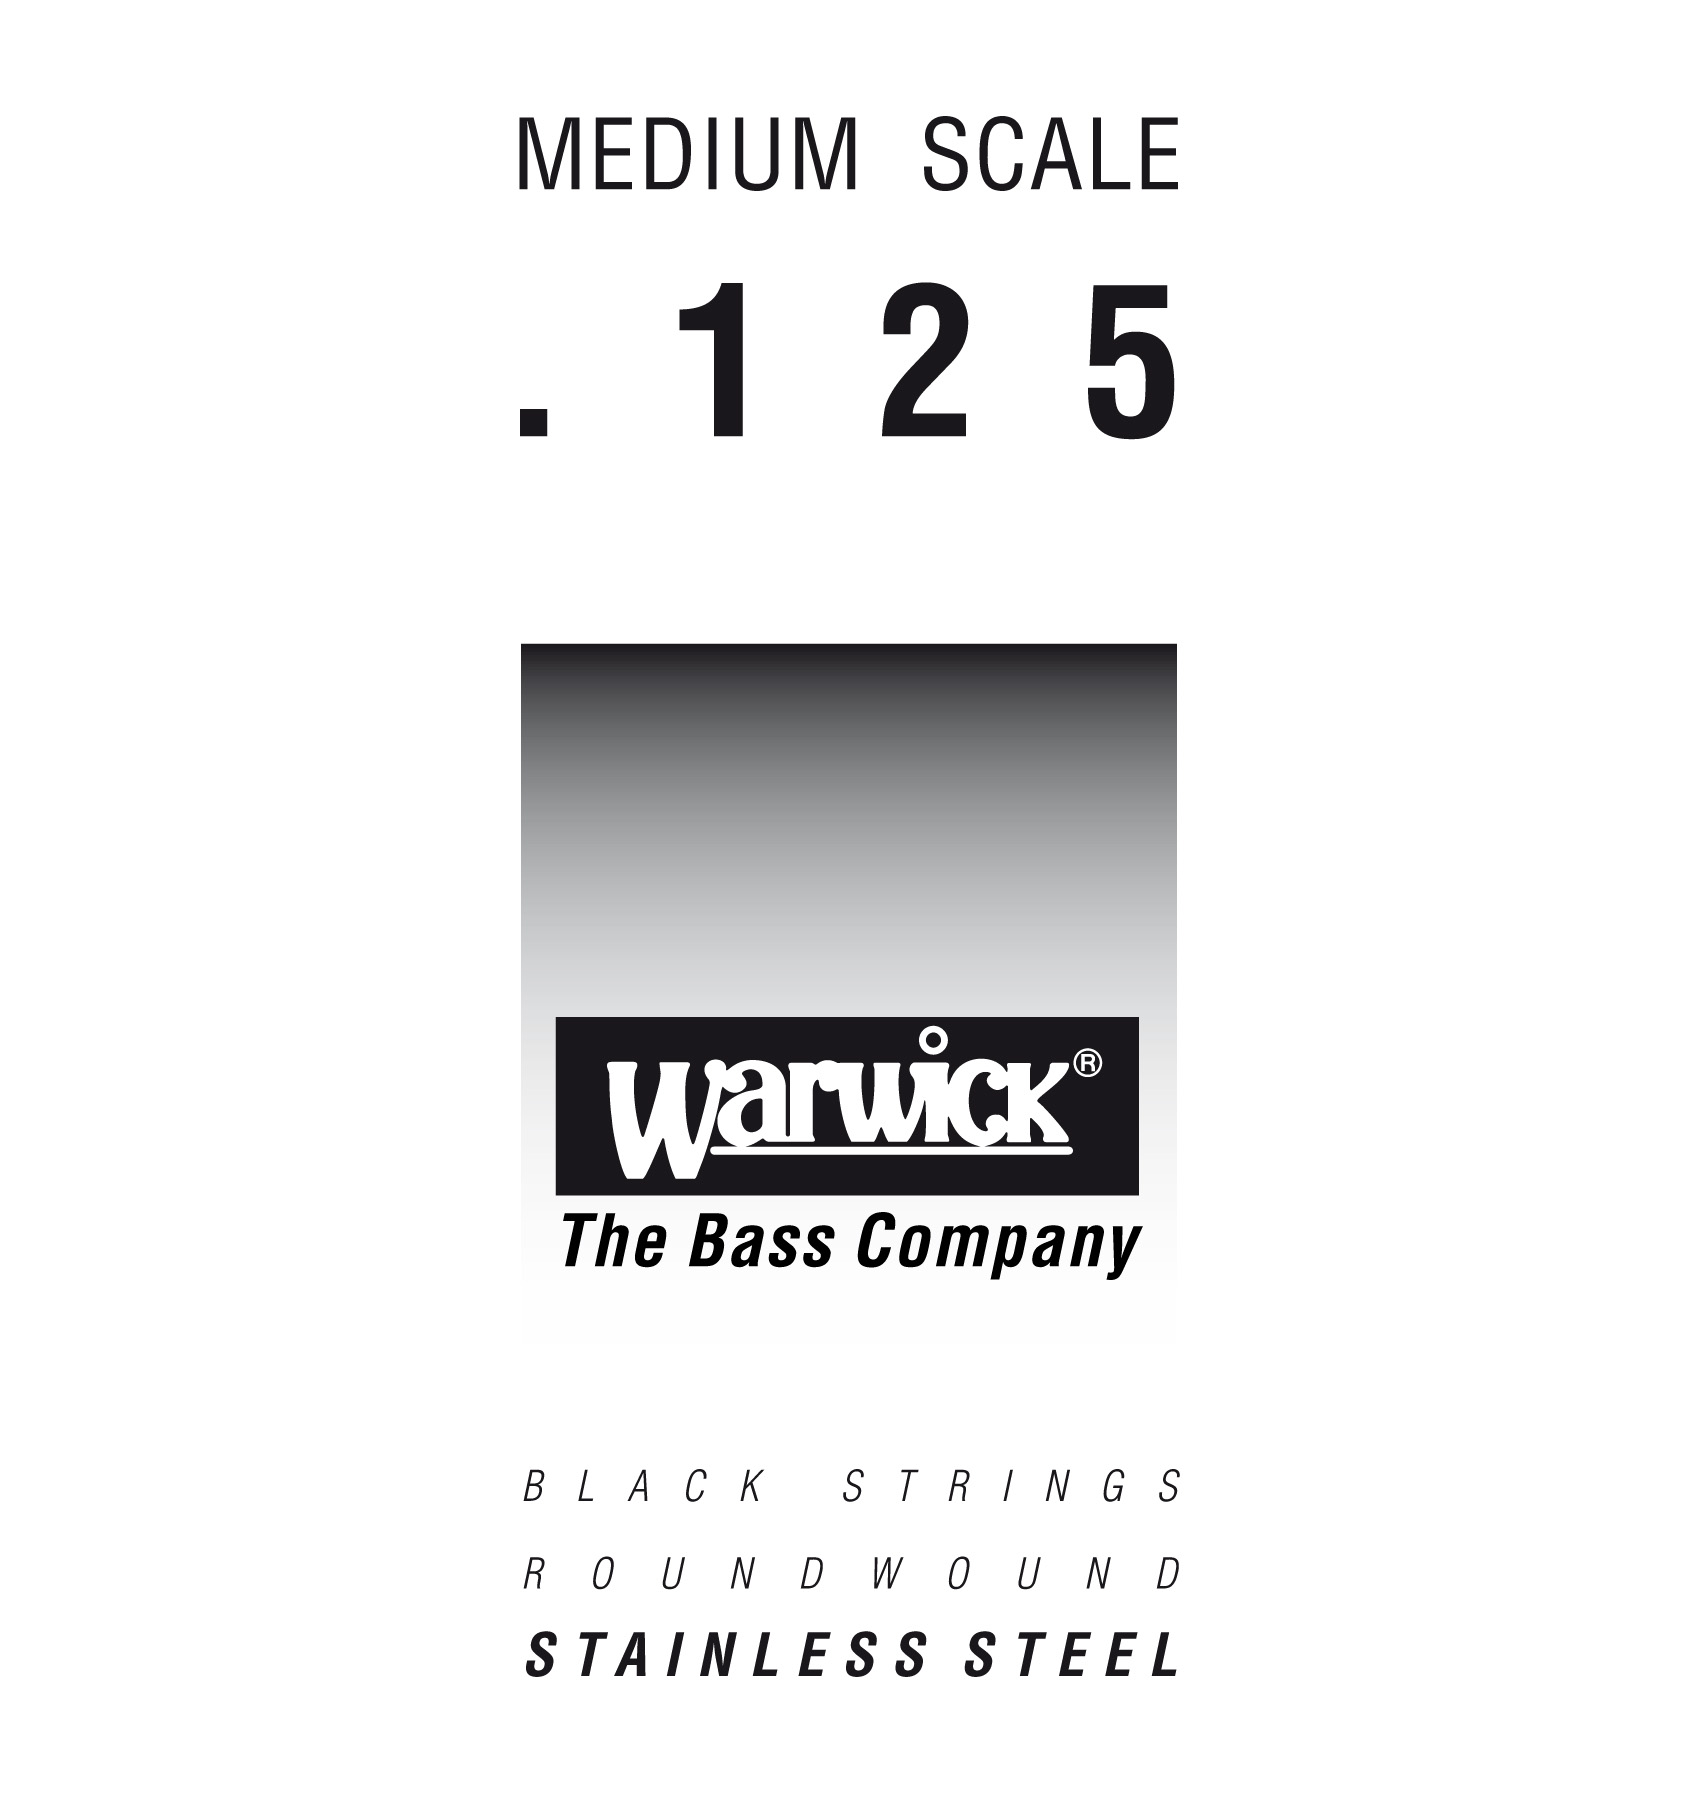 Warwick Black Label Bass Strings, Stainless Steel - Bass Single String, .125", Medium Scale